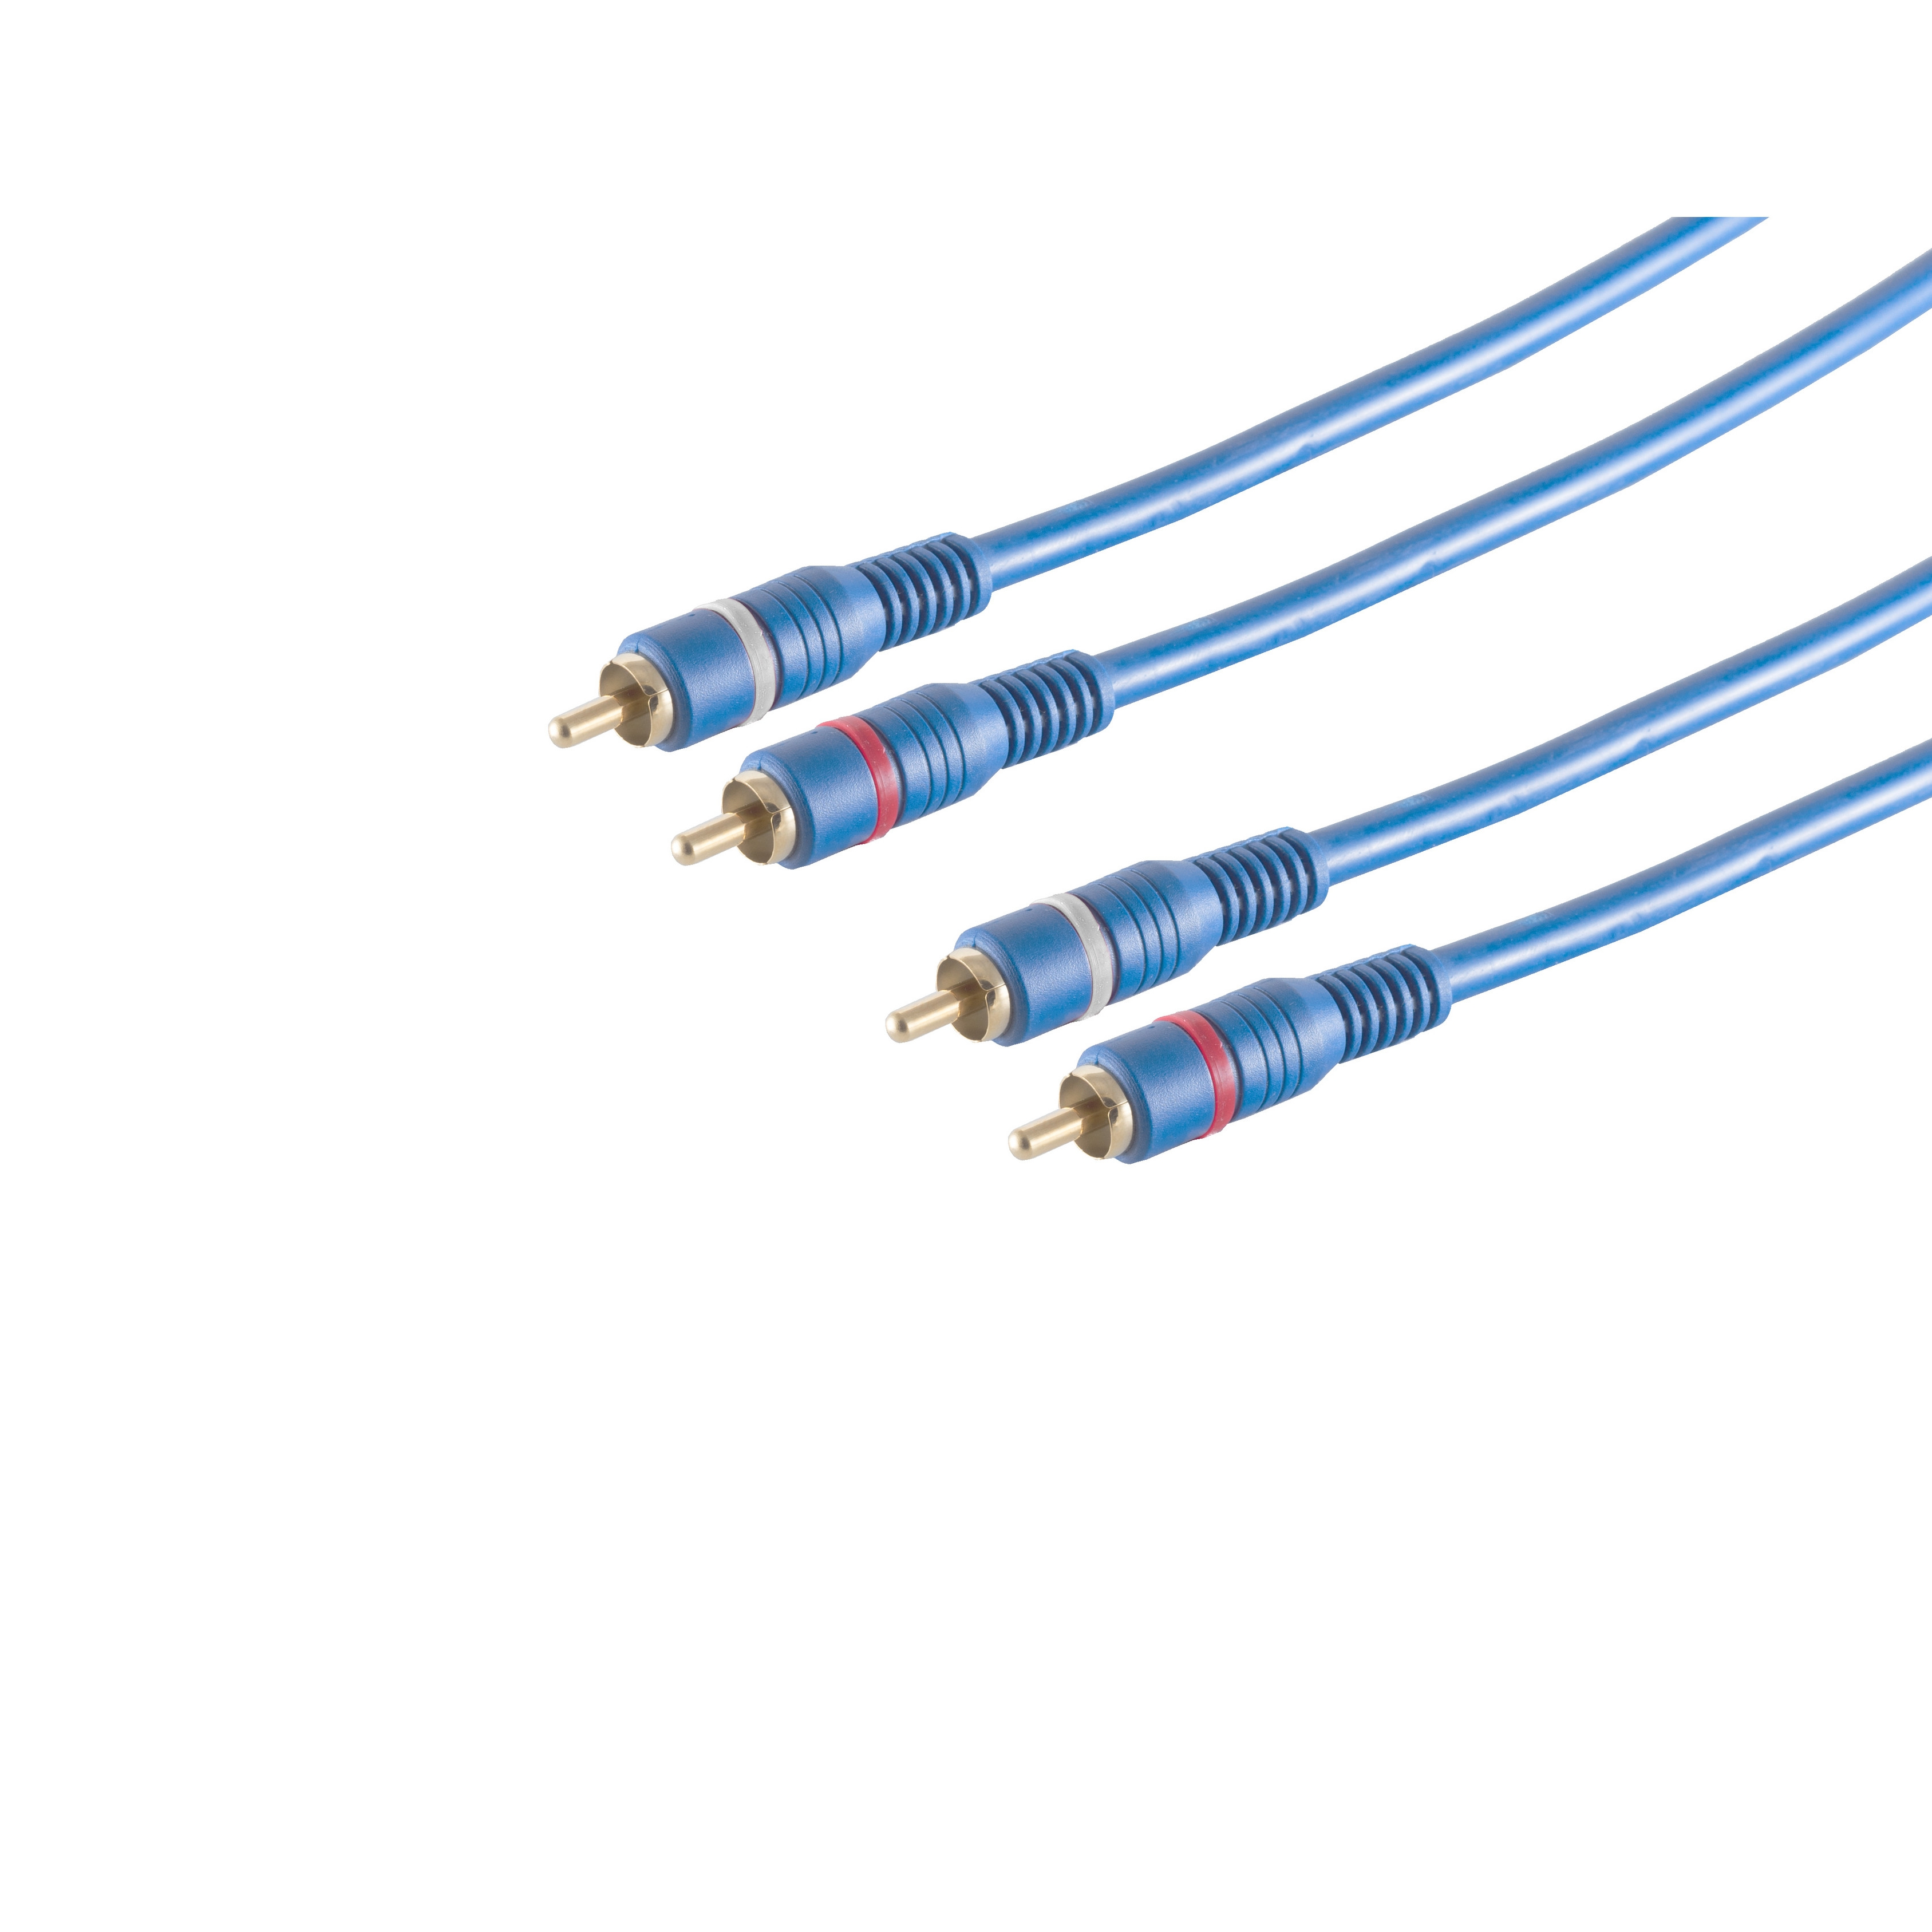 S/CONN MAXIMUM Cinchkabel Kabel 5m Stecker/ Audio/Video Kabel Stecker blau CONNECTIVITY 2 2 TWIN